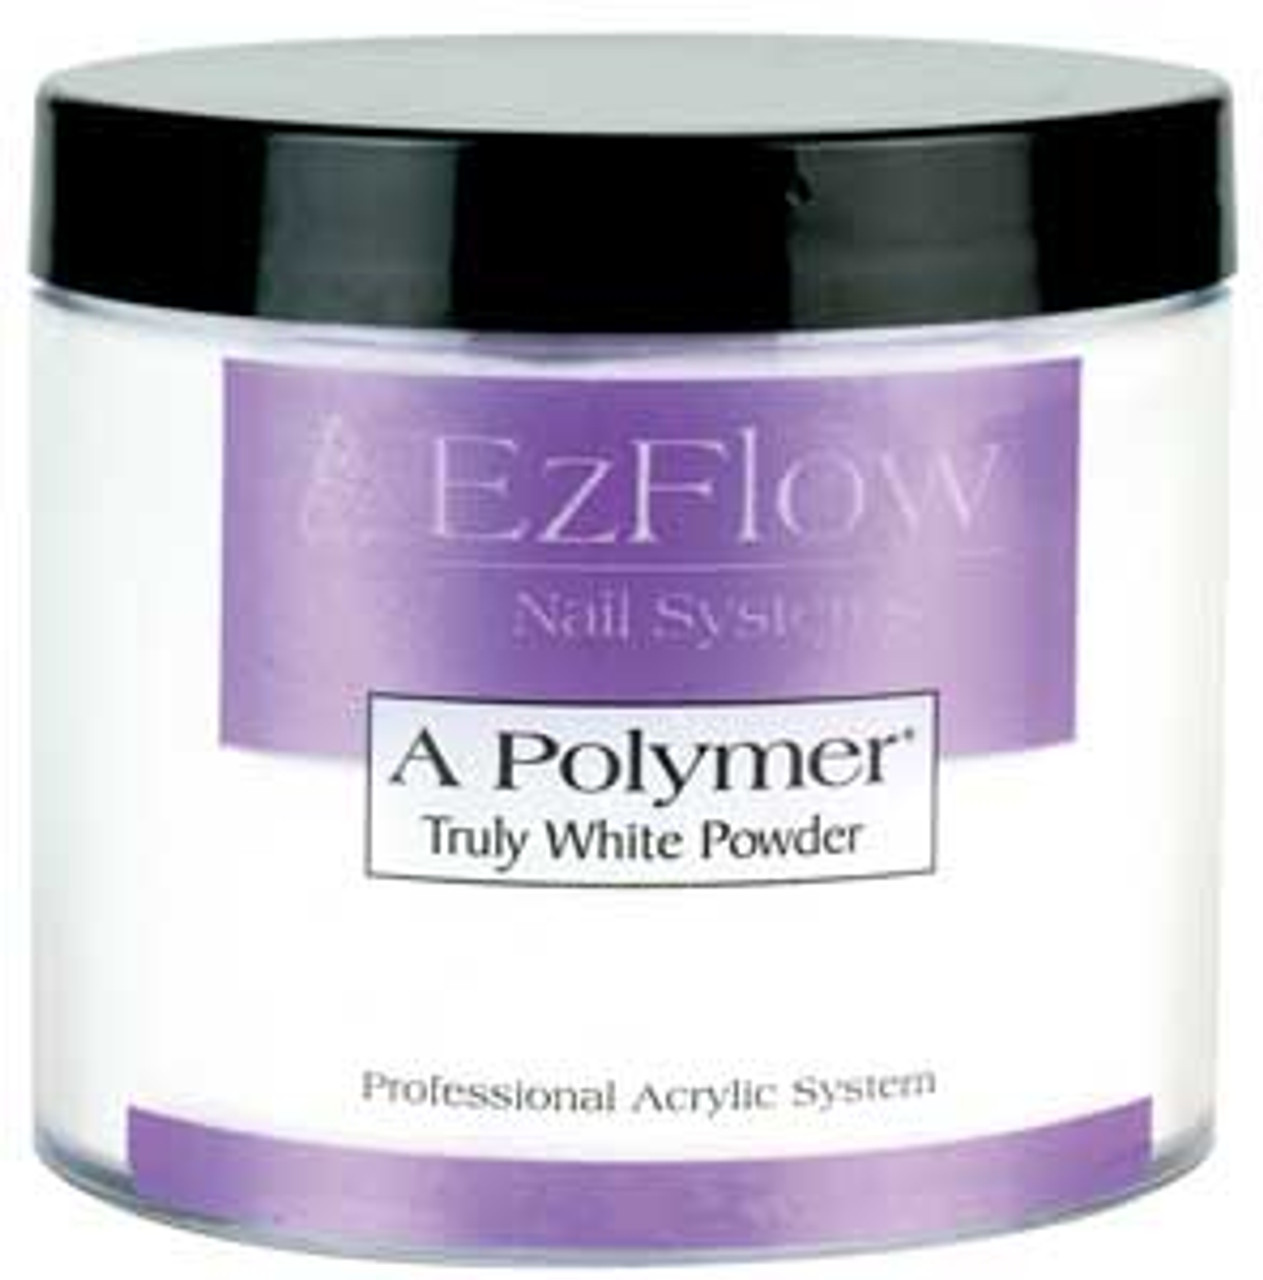 EzFlow A - Polymer Truly White - 4oz